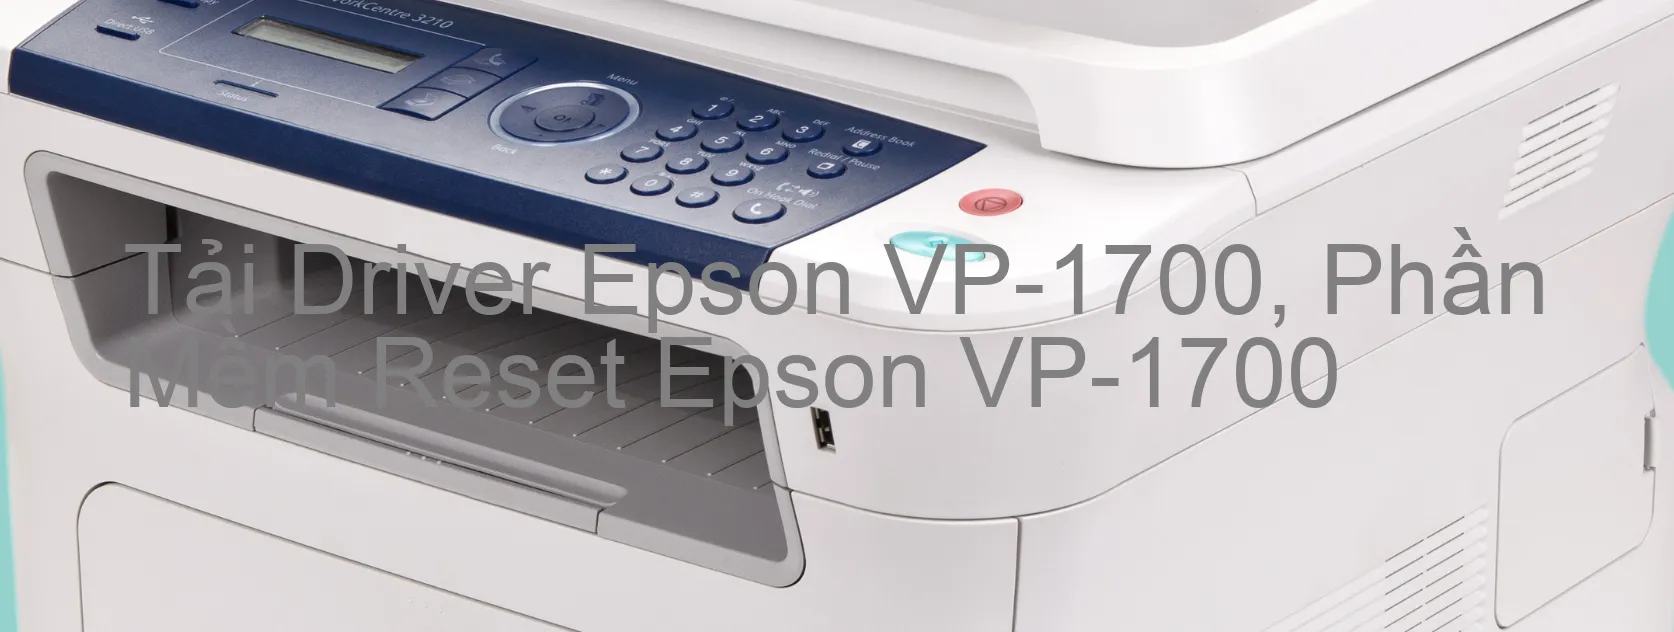 Driver Epson VP-1700, Phần Mềm Reset Epson VP-1700